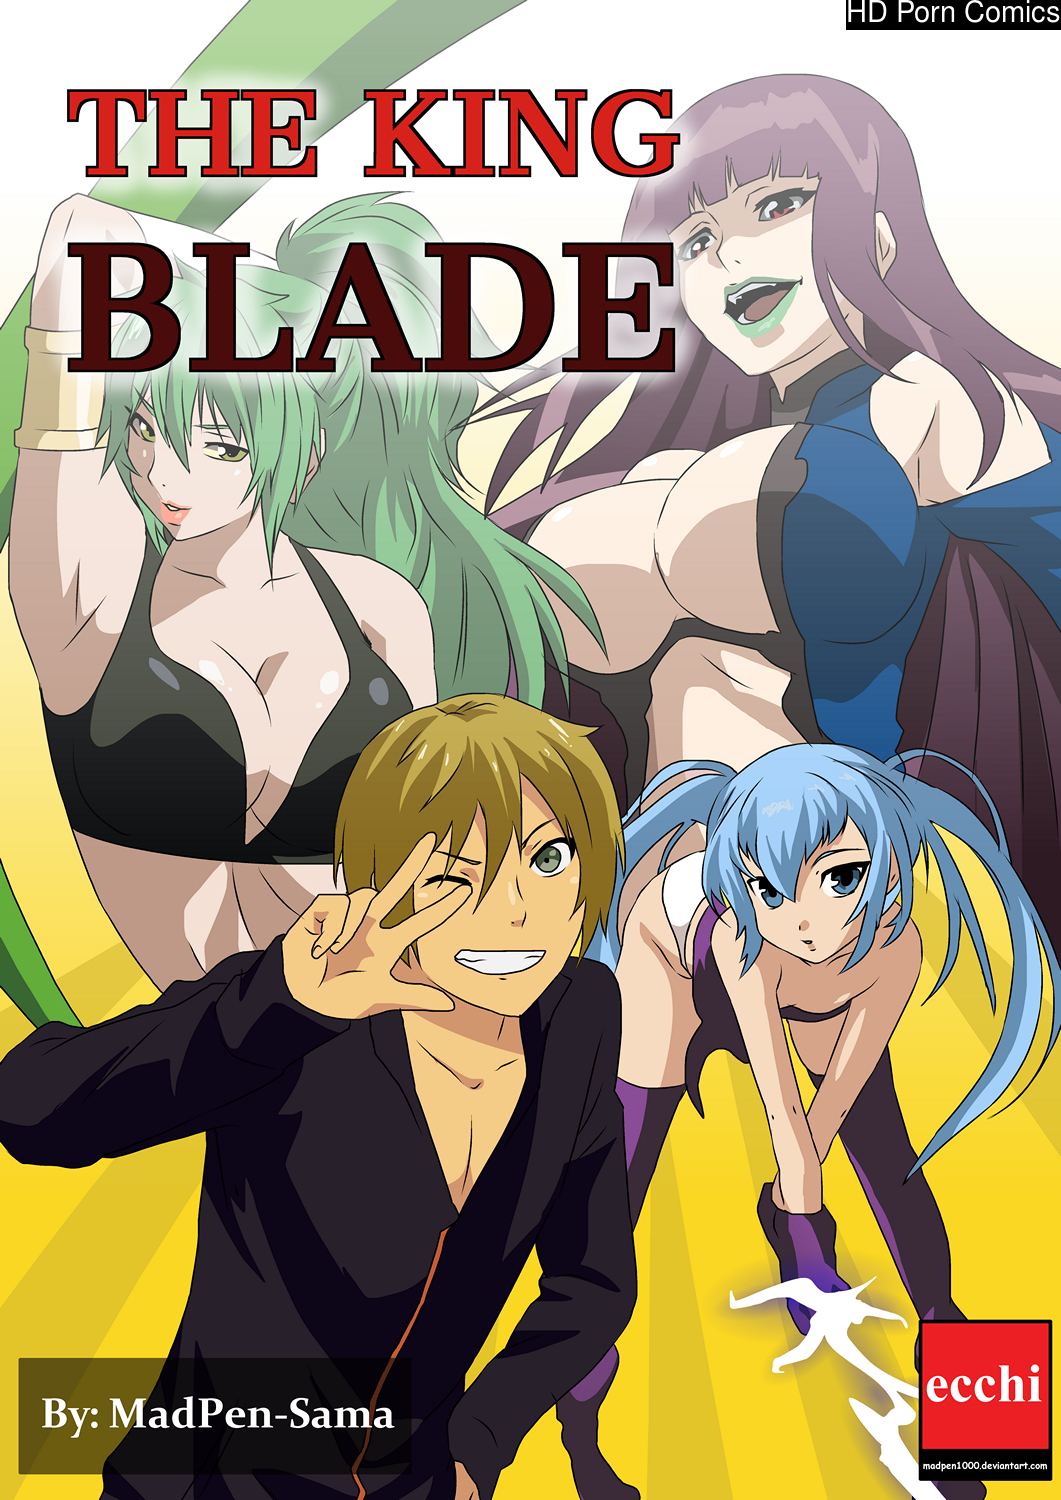 Blade Blade Hentai - The King Blade 1 comic porn - HD Porn Comics